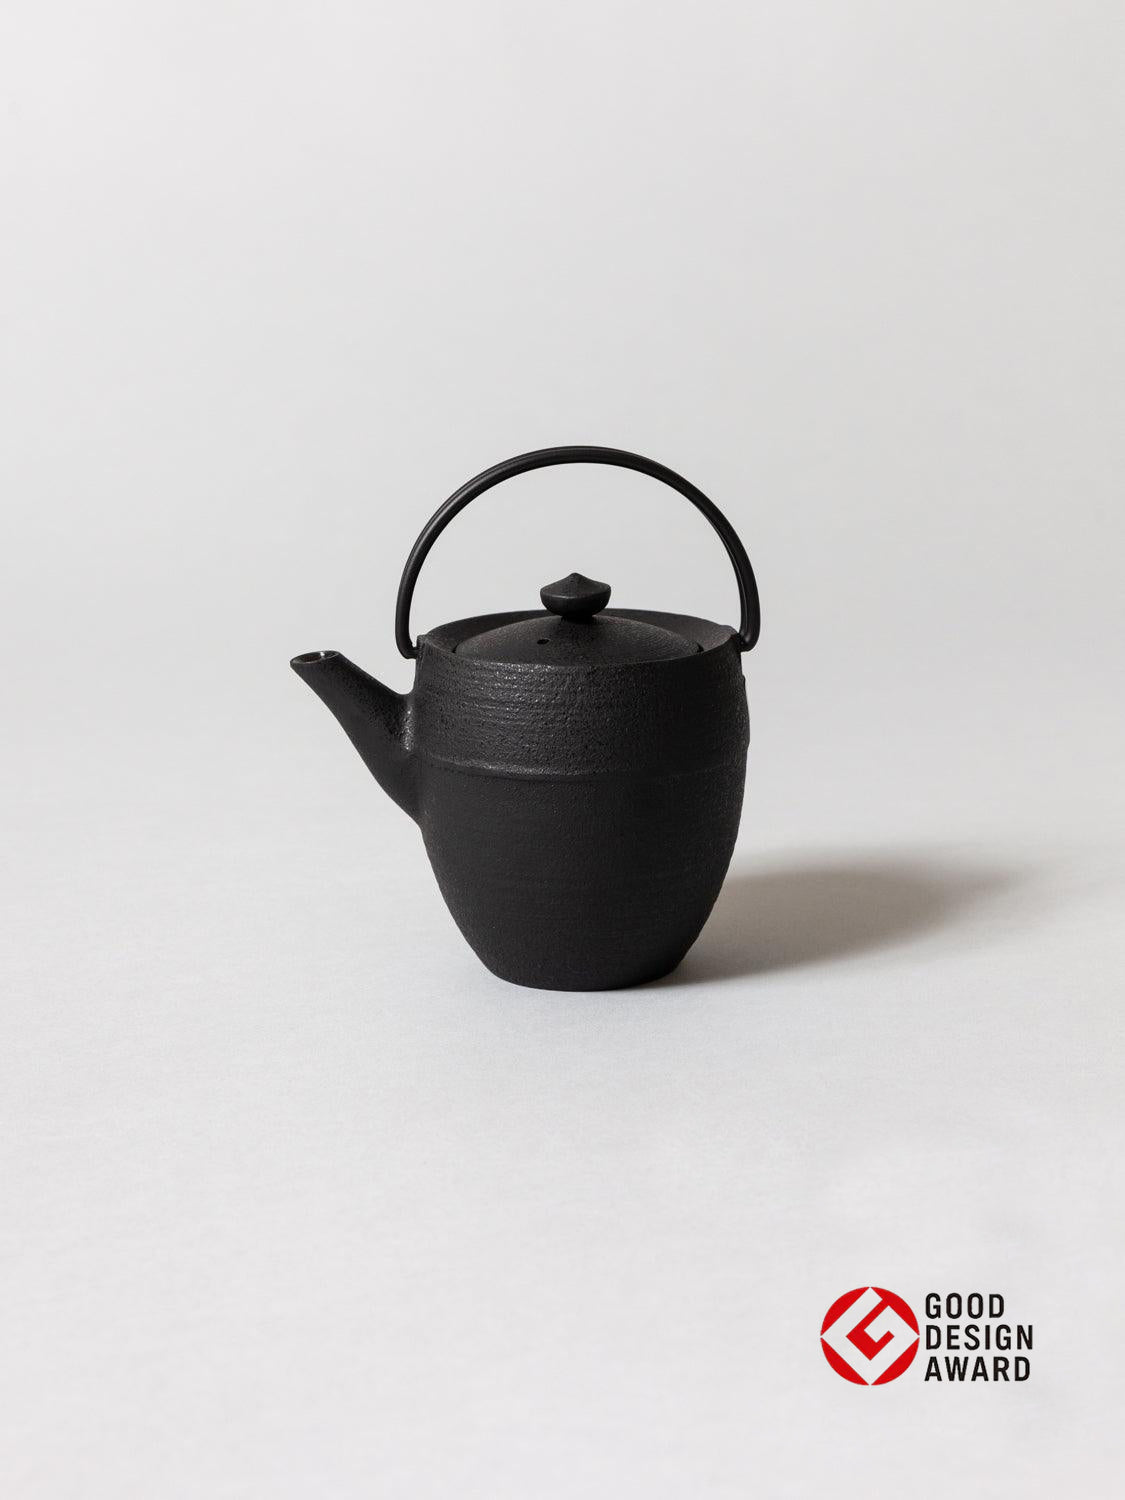 Marutsutsu Cast Iron Teapot